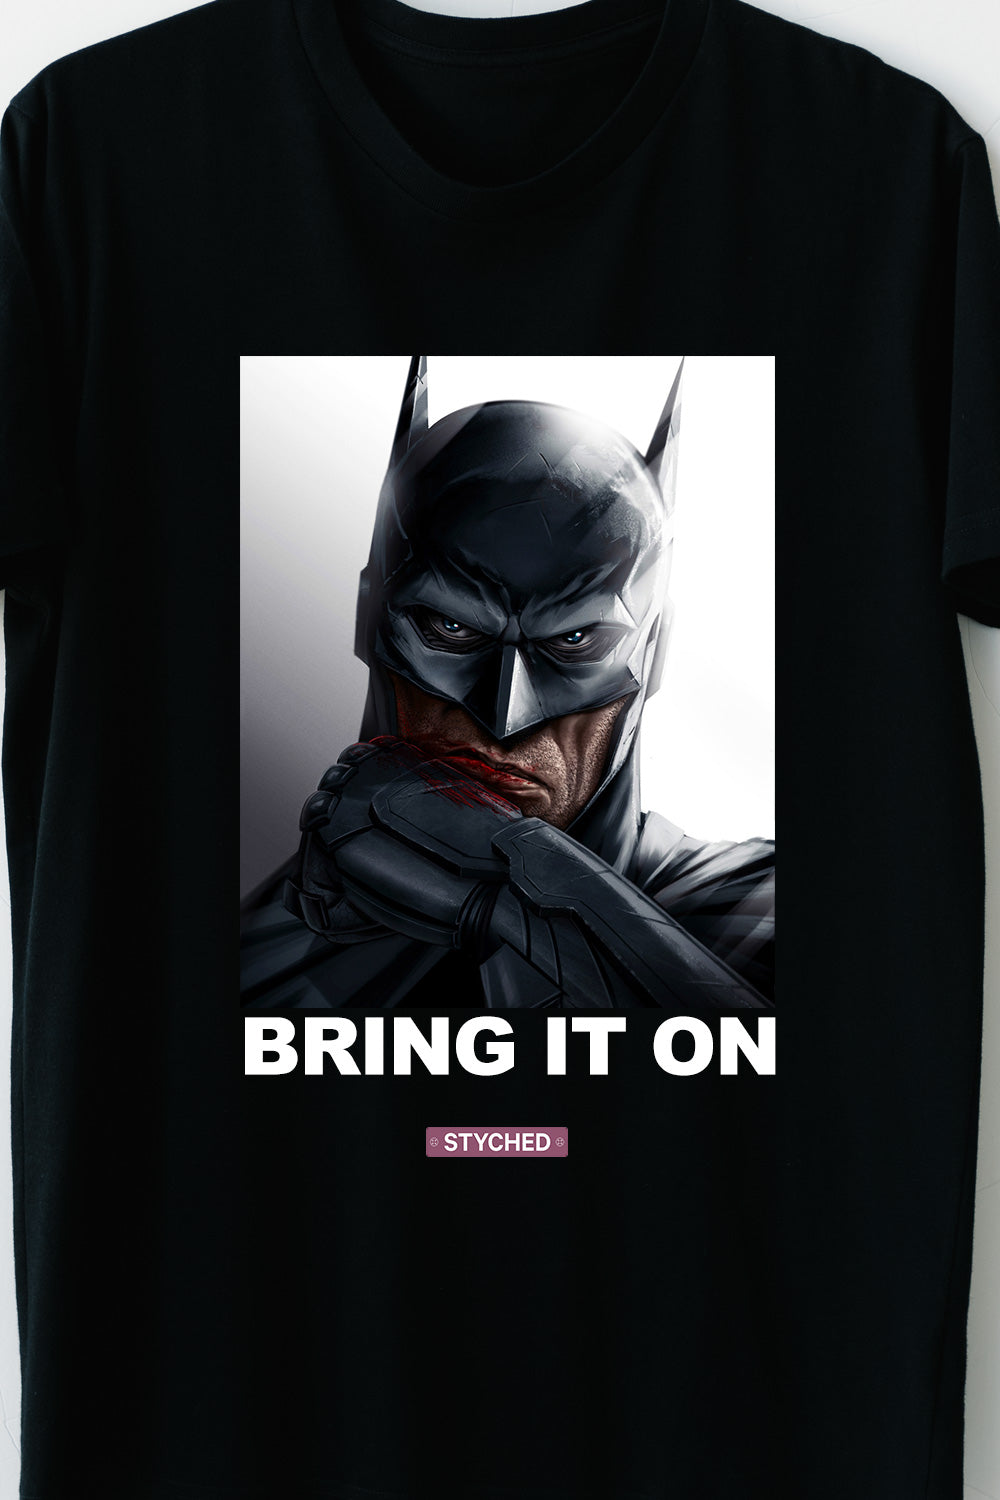 Batman - Bring it on! DC Comics Patch style T-Shirt Black